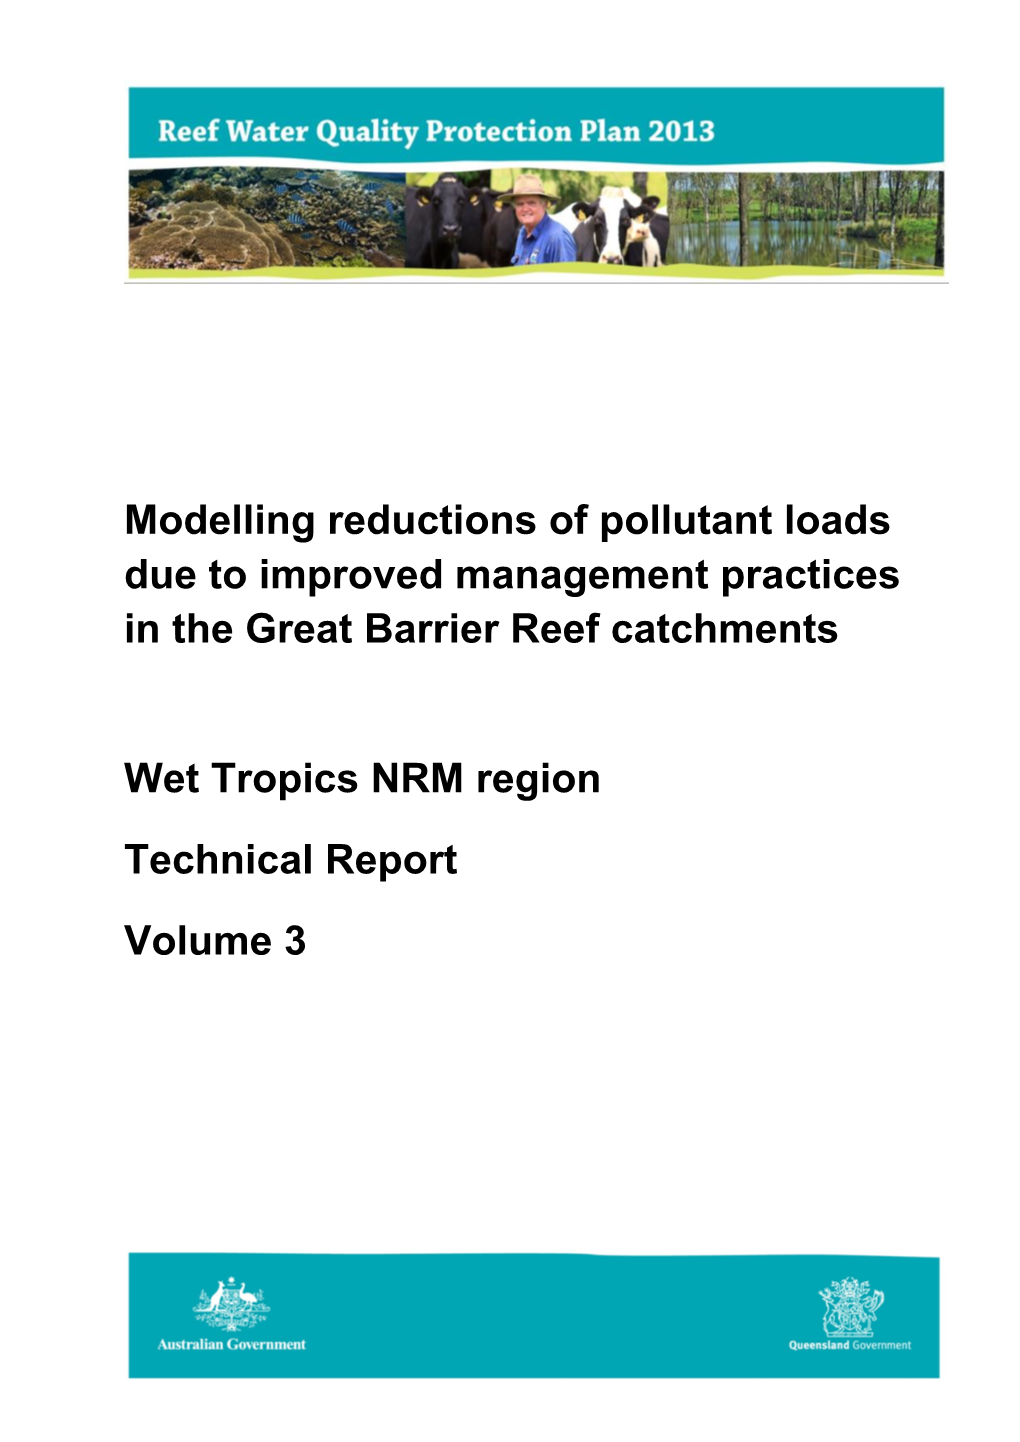 Wet Tropics NRM Region Technical Report Volume 3